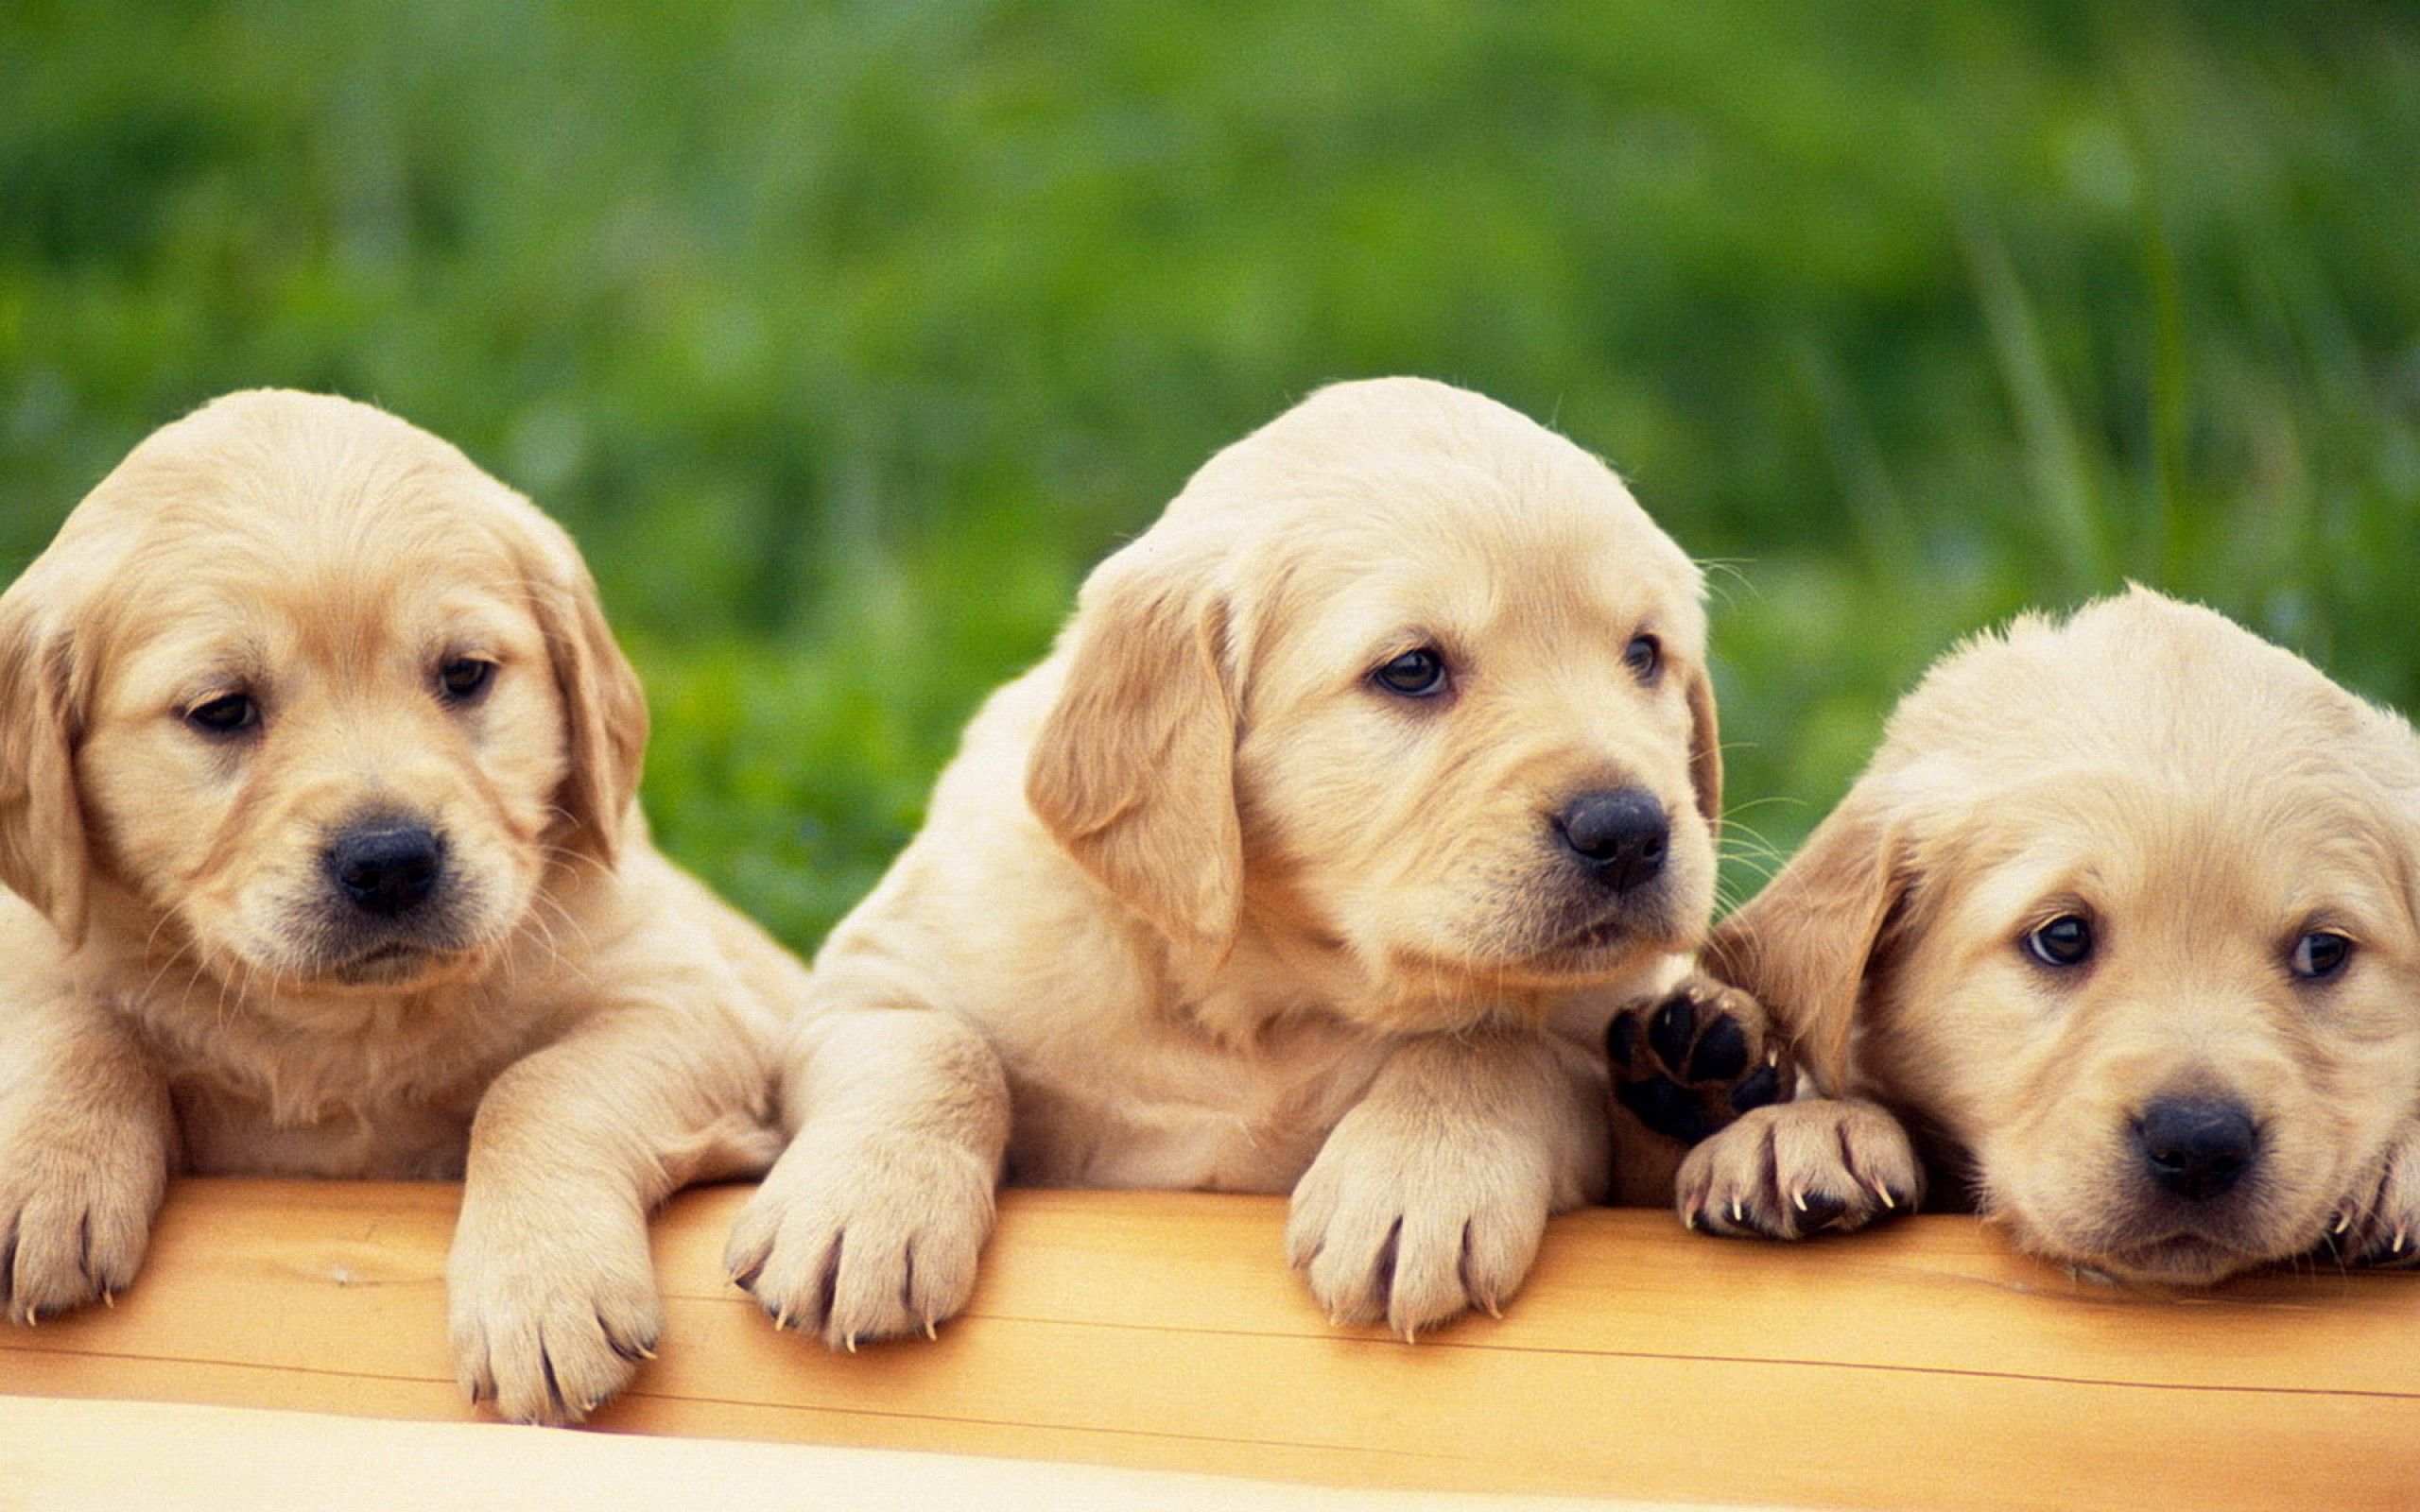 Funny Pet Wallpapers Cute Labrador Retriever Puppies 2560x1600PX ...